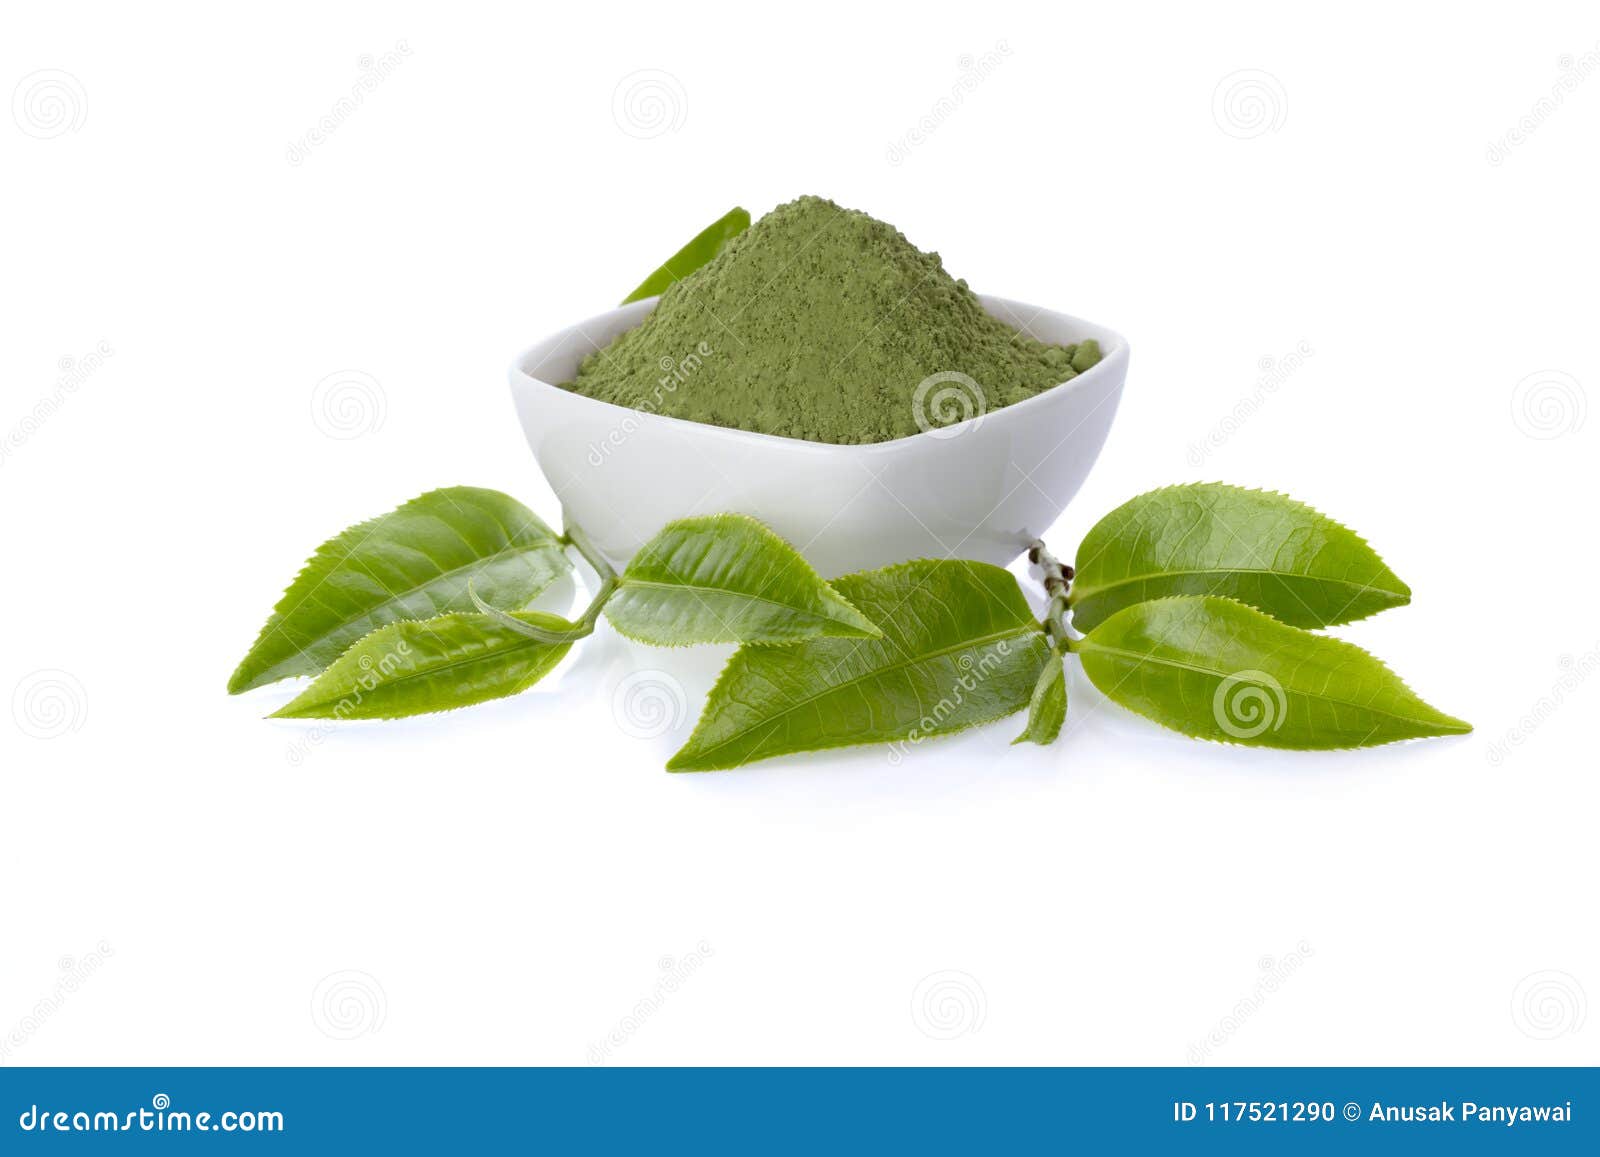 powder green tea and green tea leaf